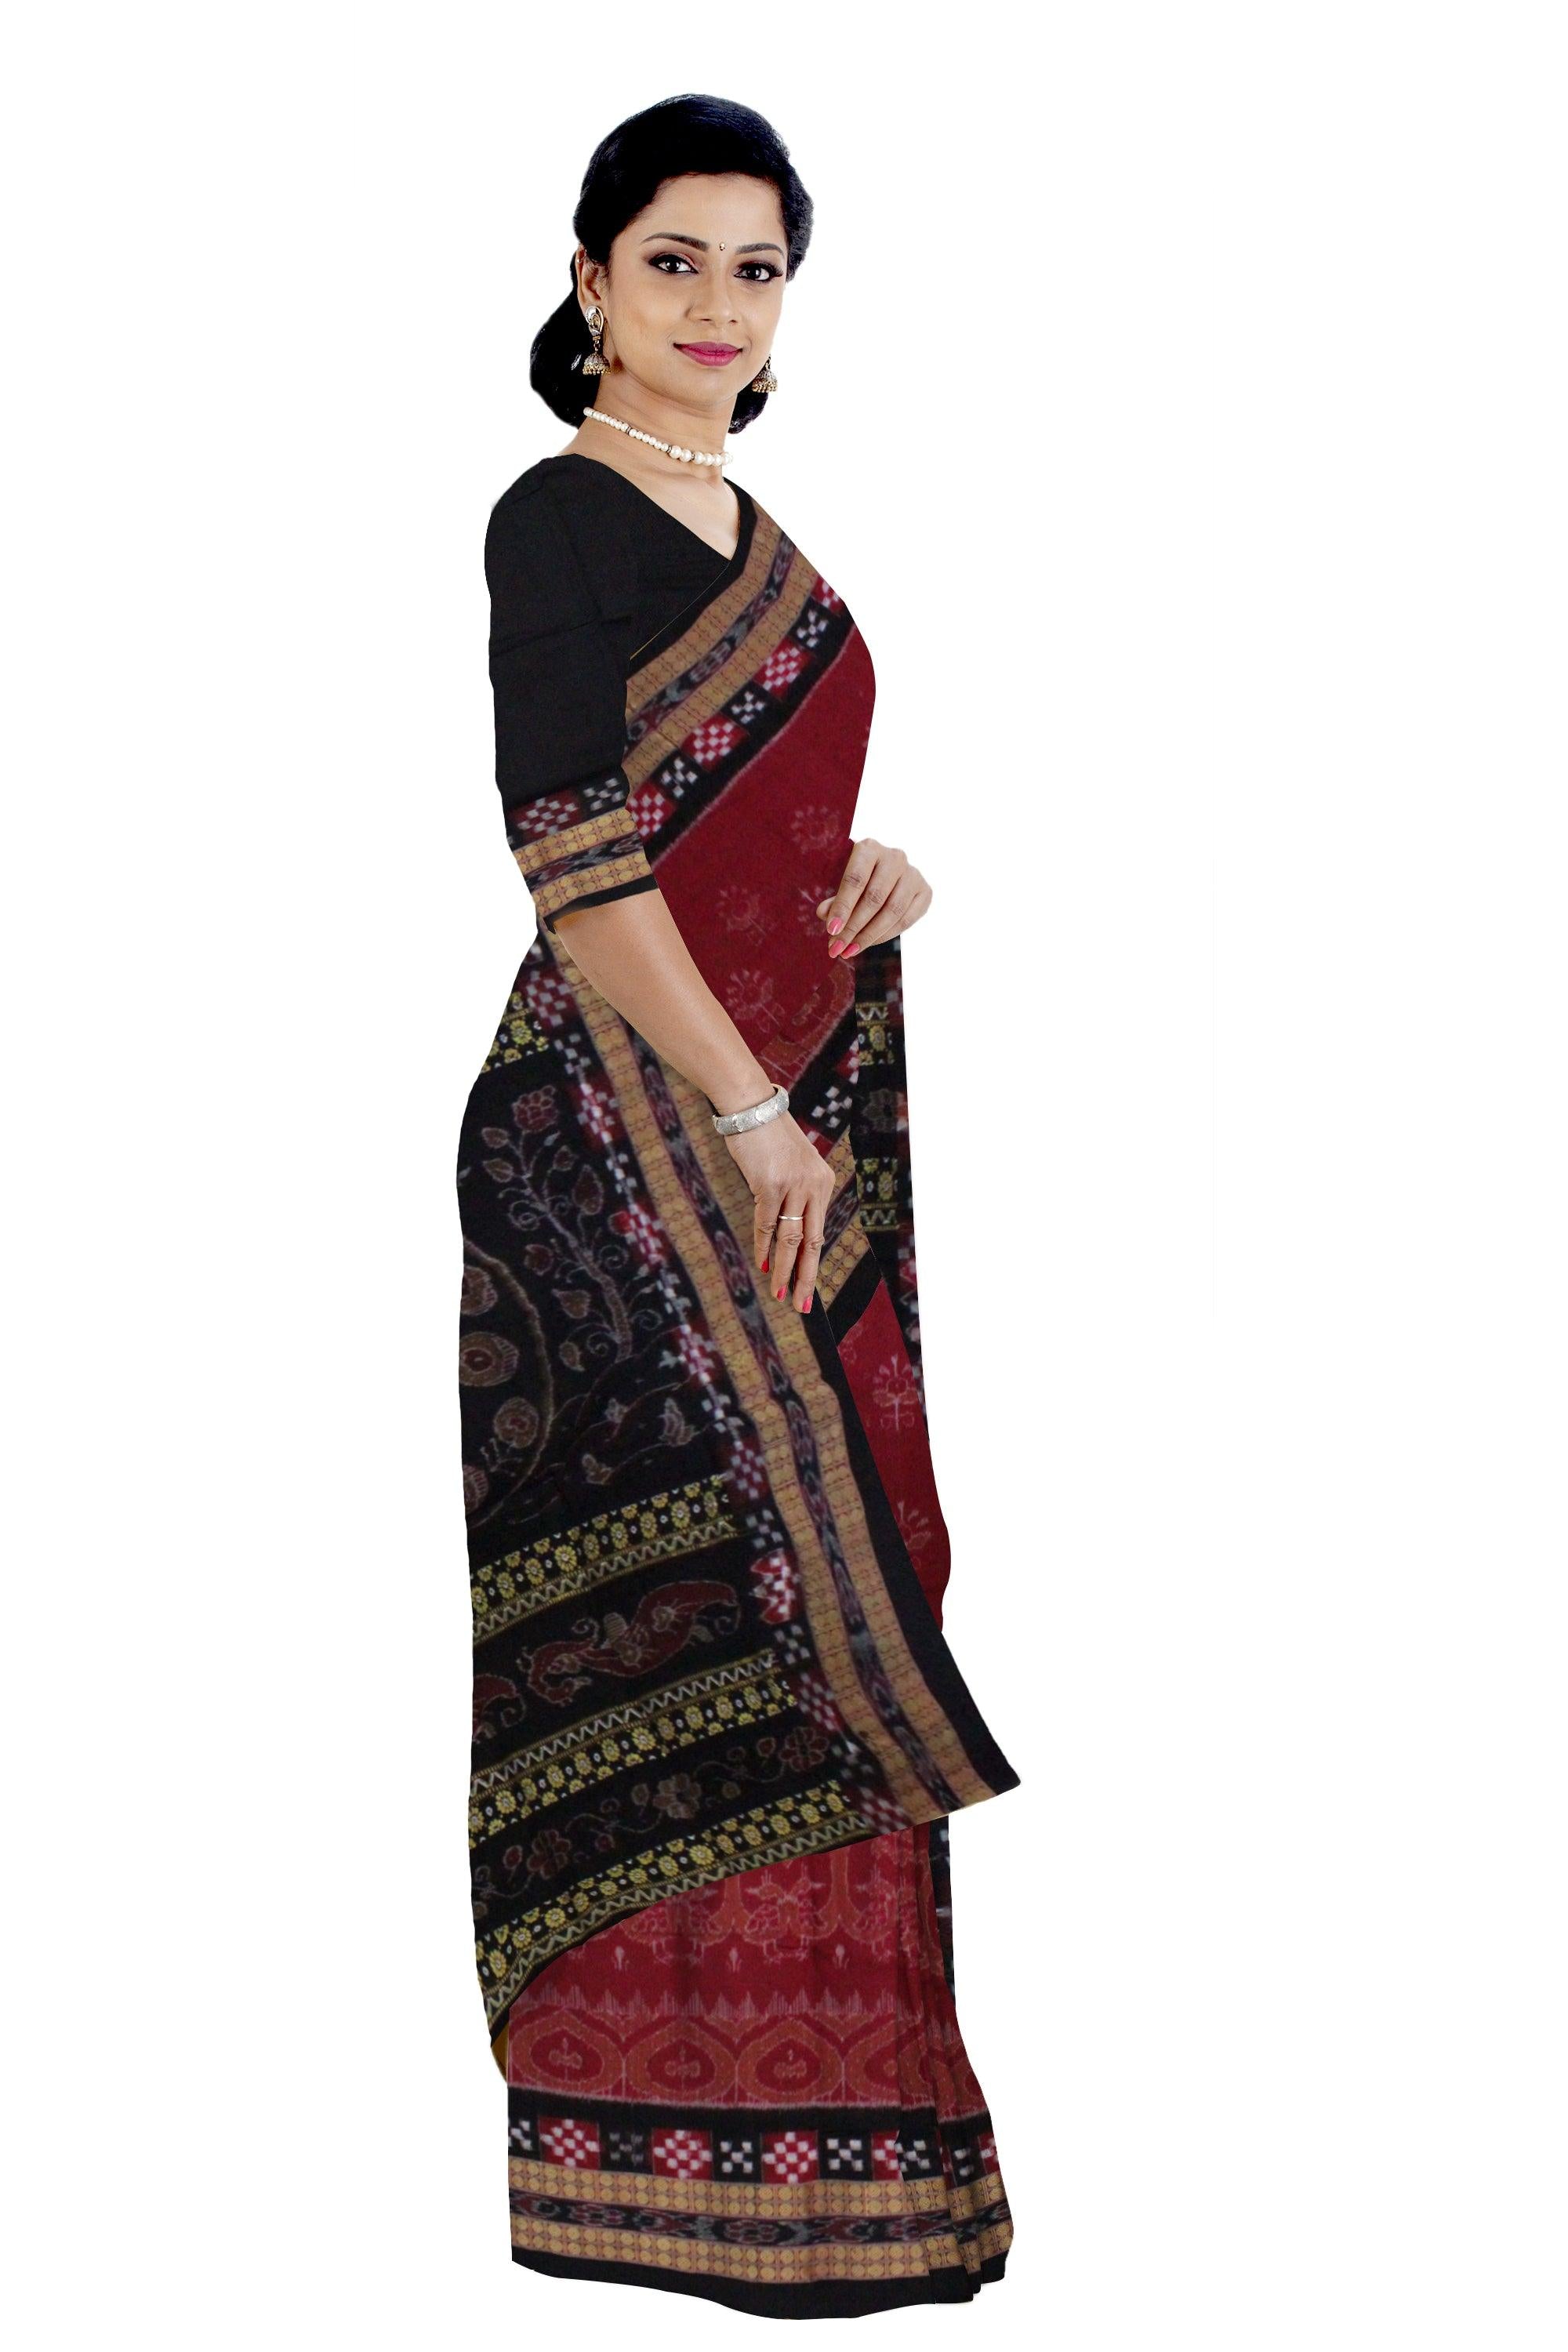 Pasapali design ,Peacock and Flower Pattern Sambaluri cotton saree in Maroon color - Koshali Arts & Crafts Enterprise